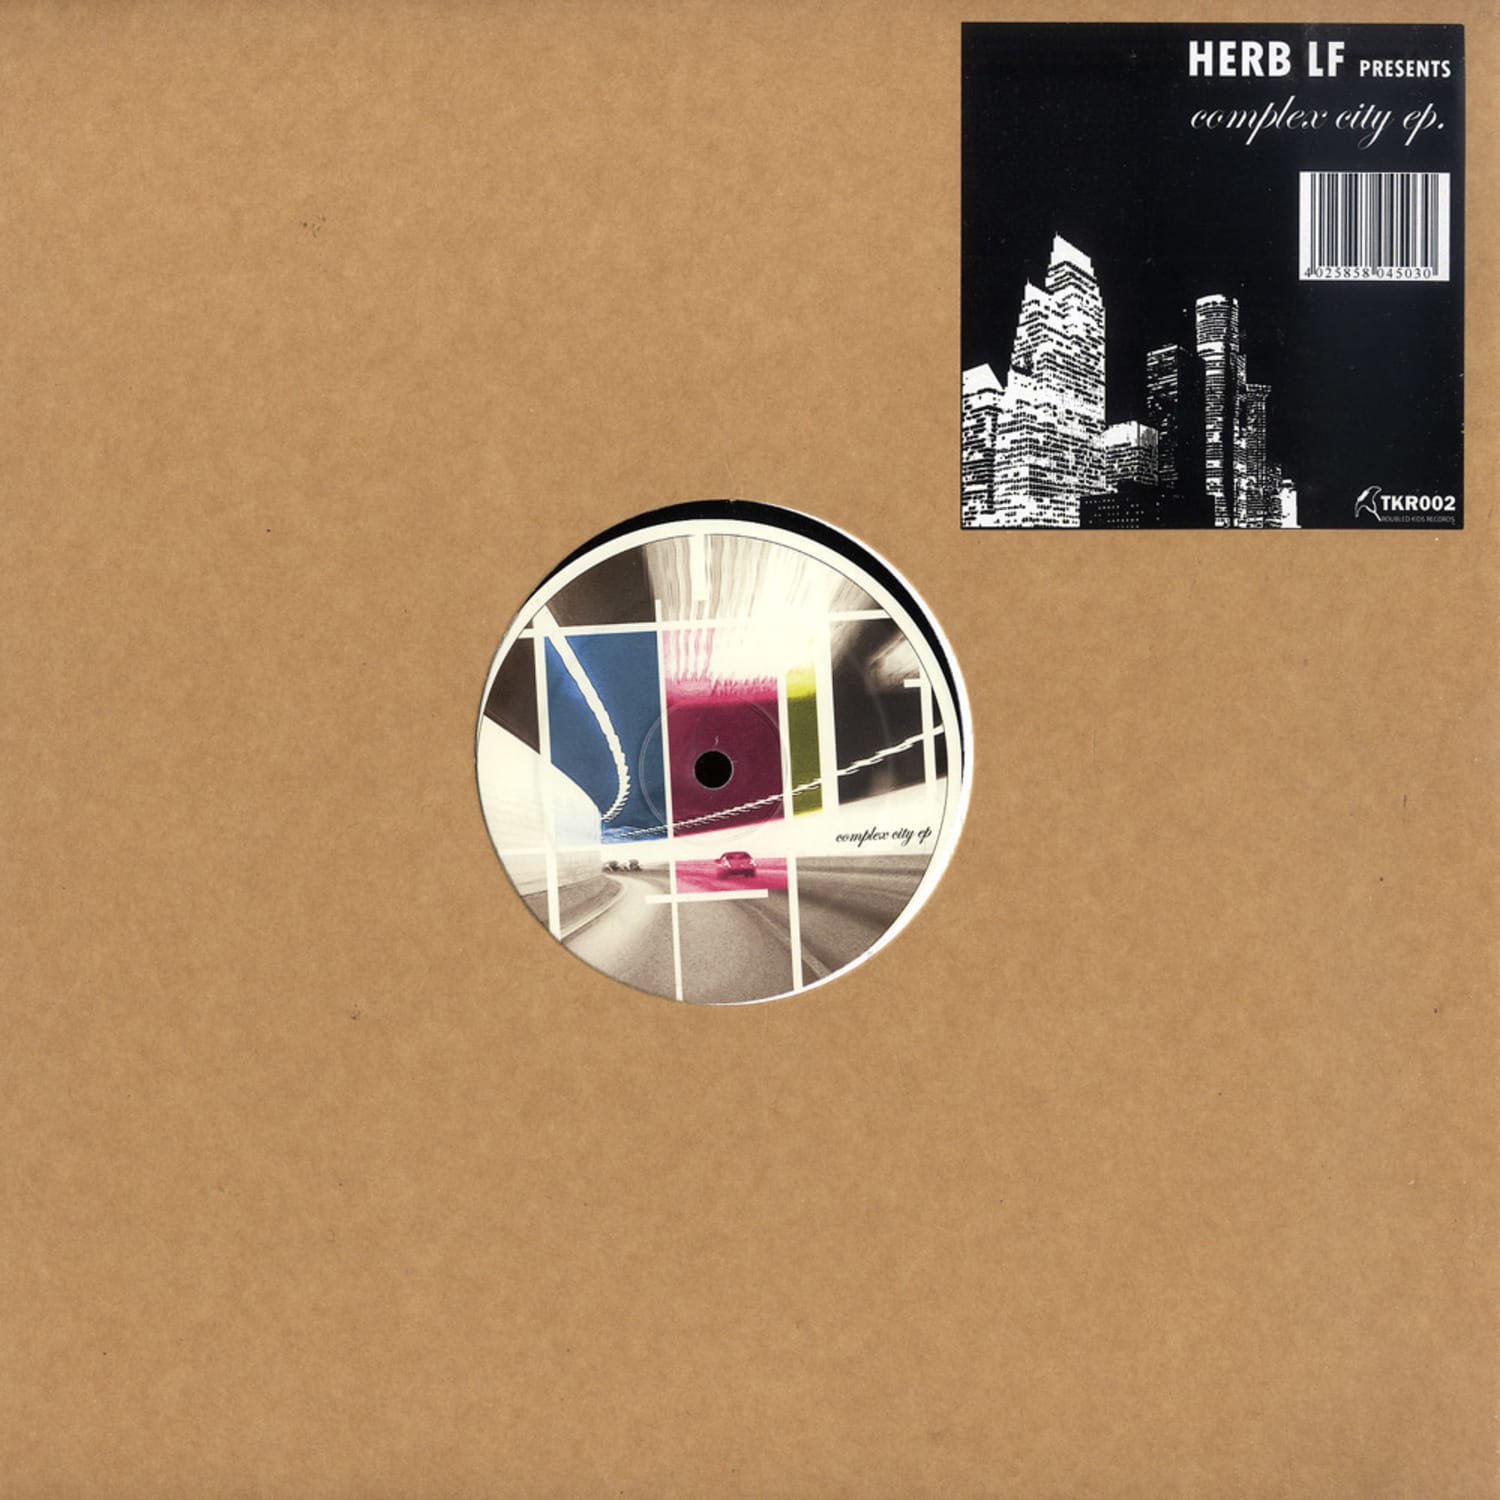 Herb LF - COMPLEX CITY EP